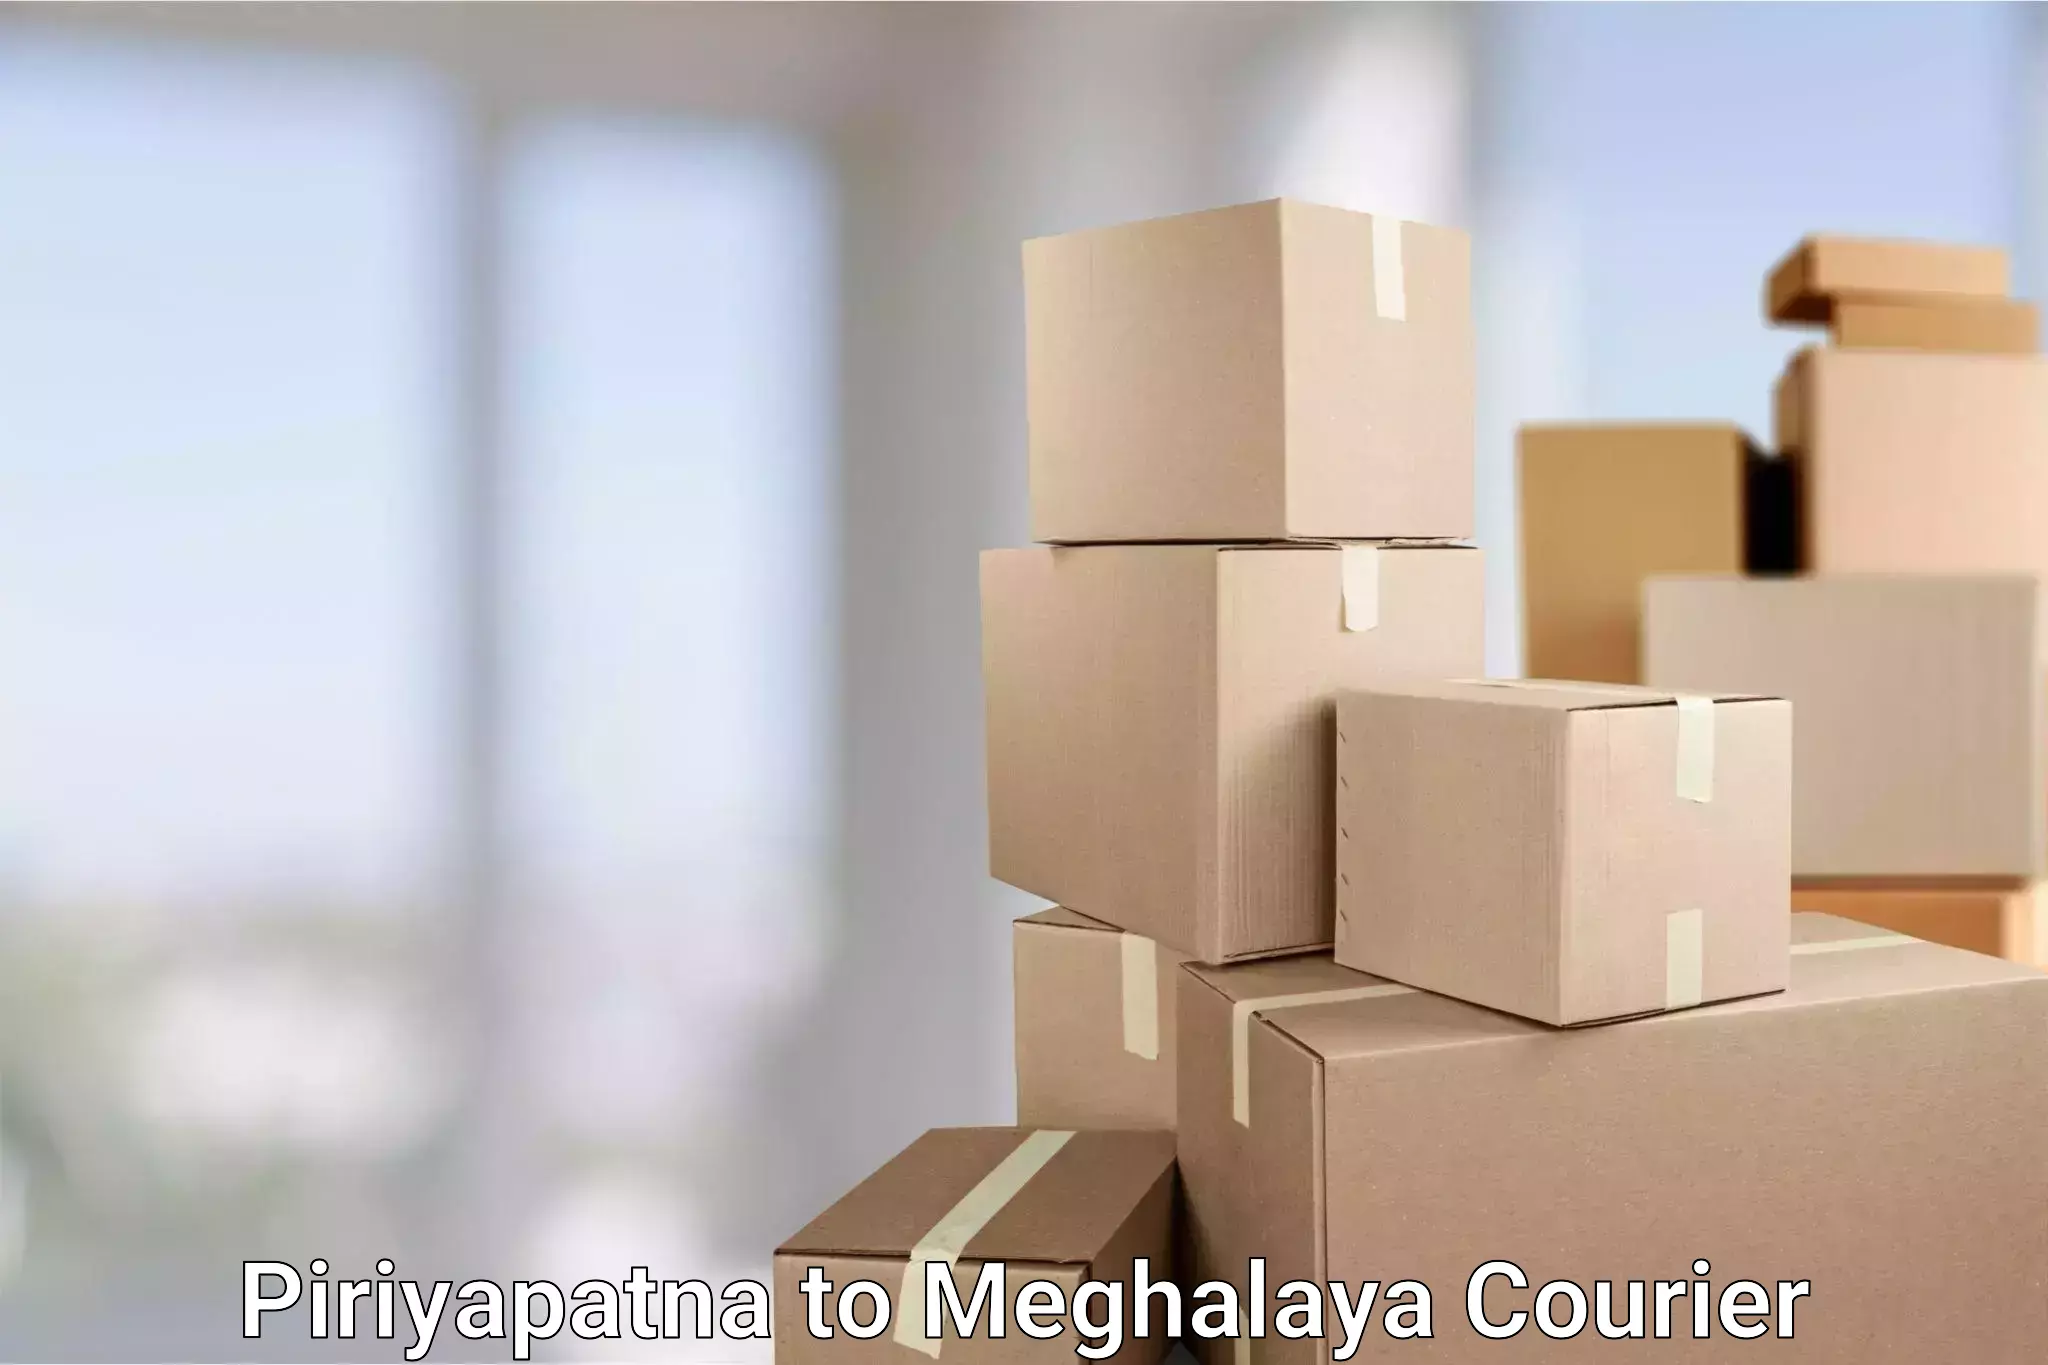 Individual parcel service Piriyapatna to Umsaw